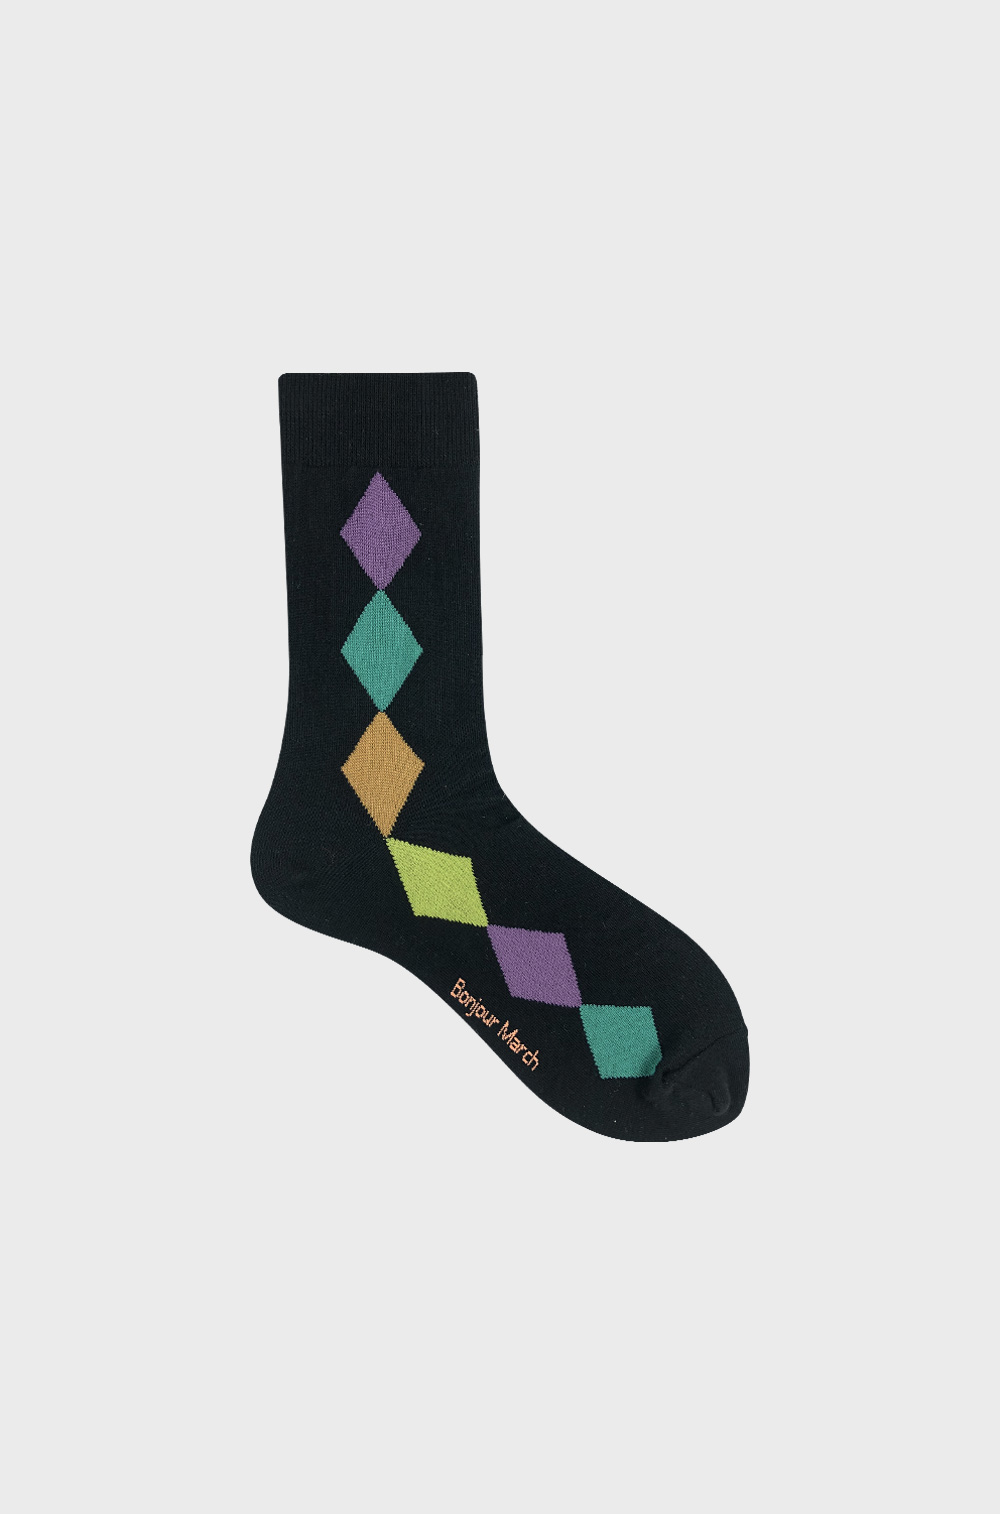 Retro argyle socks